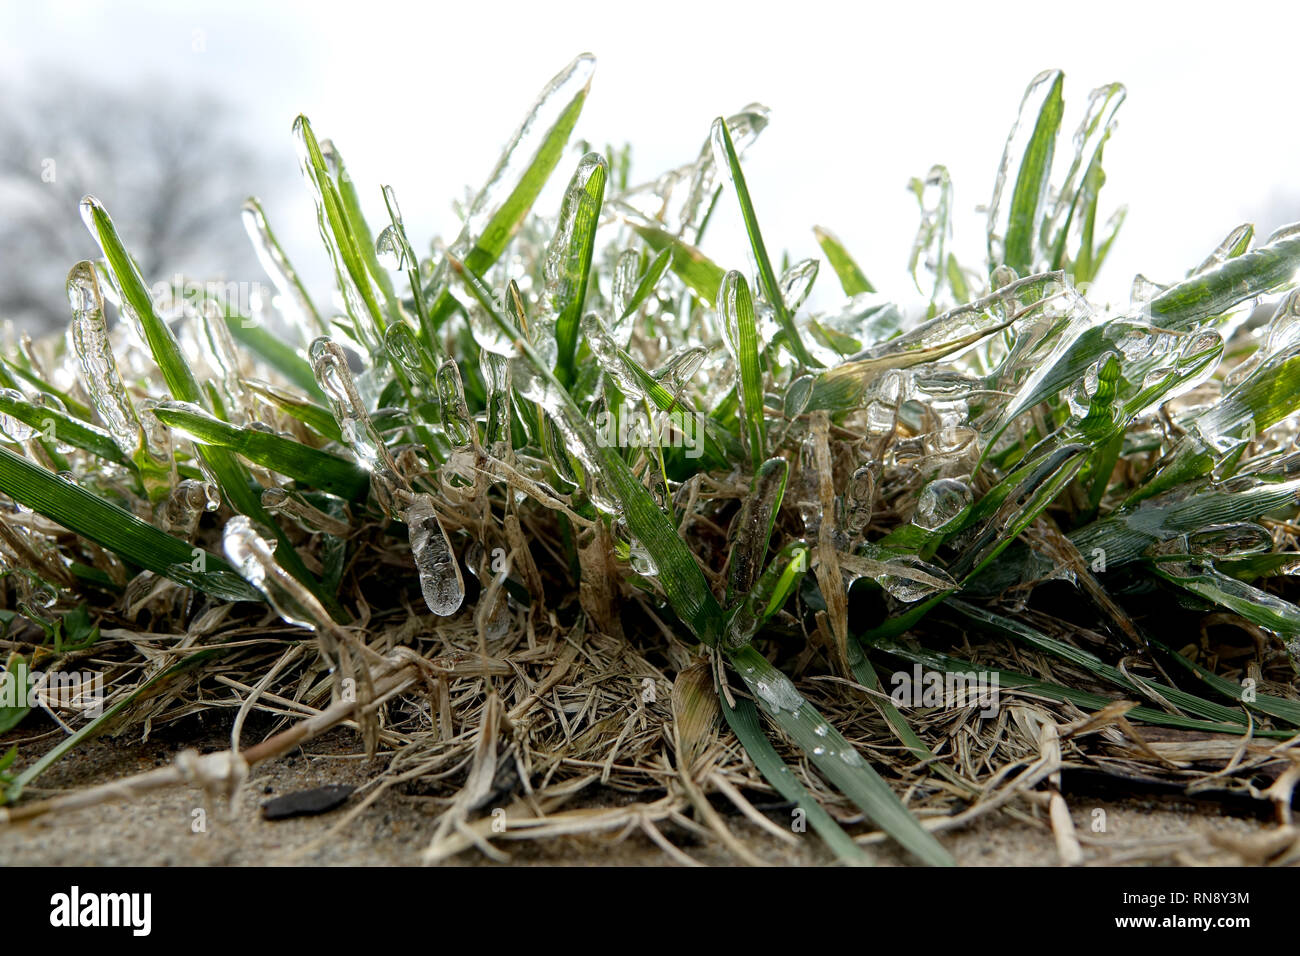 Freezing rain and icicles on lawn grass, shrubs, evergreens, birdhouse and bird bath Stock Photo